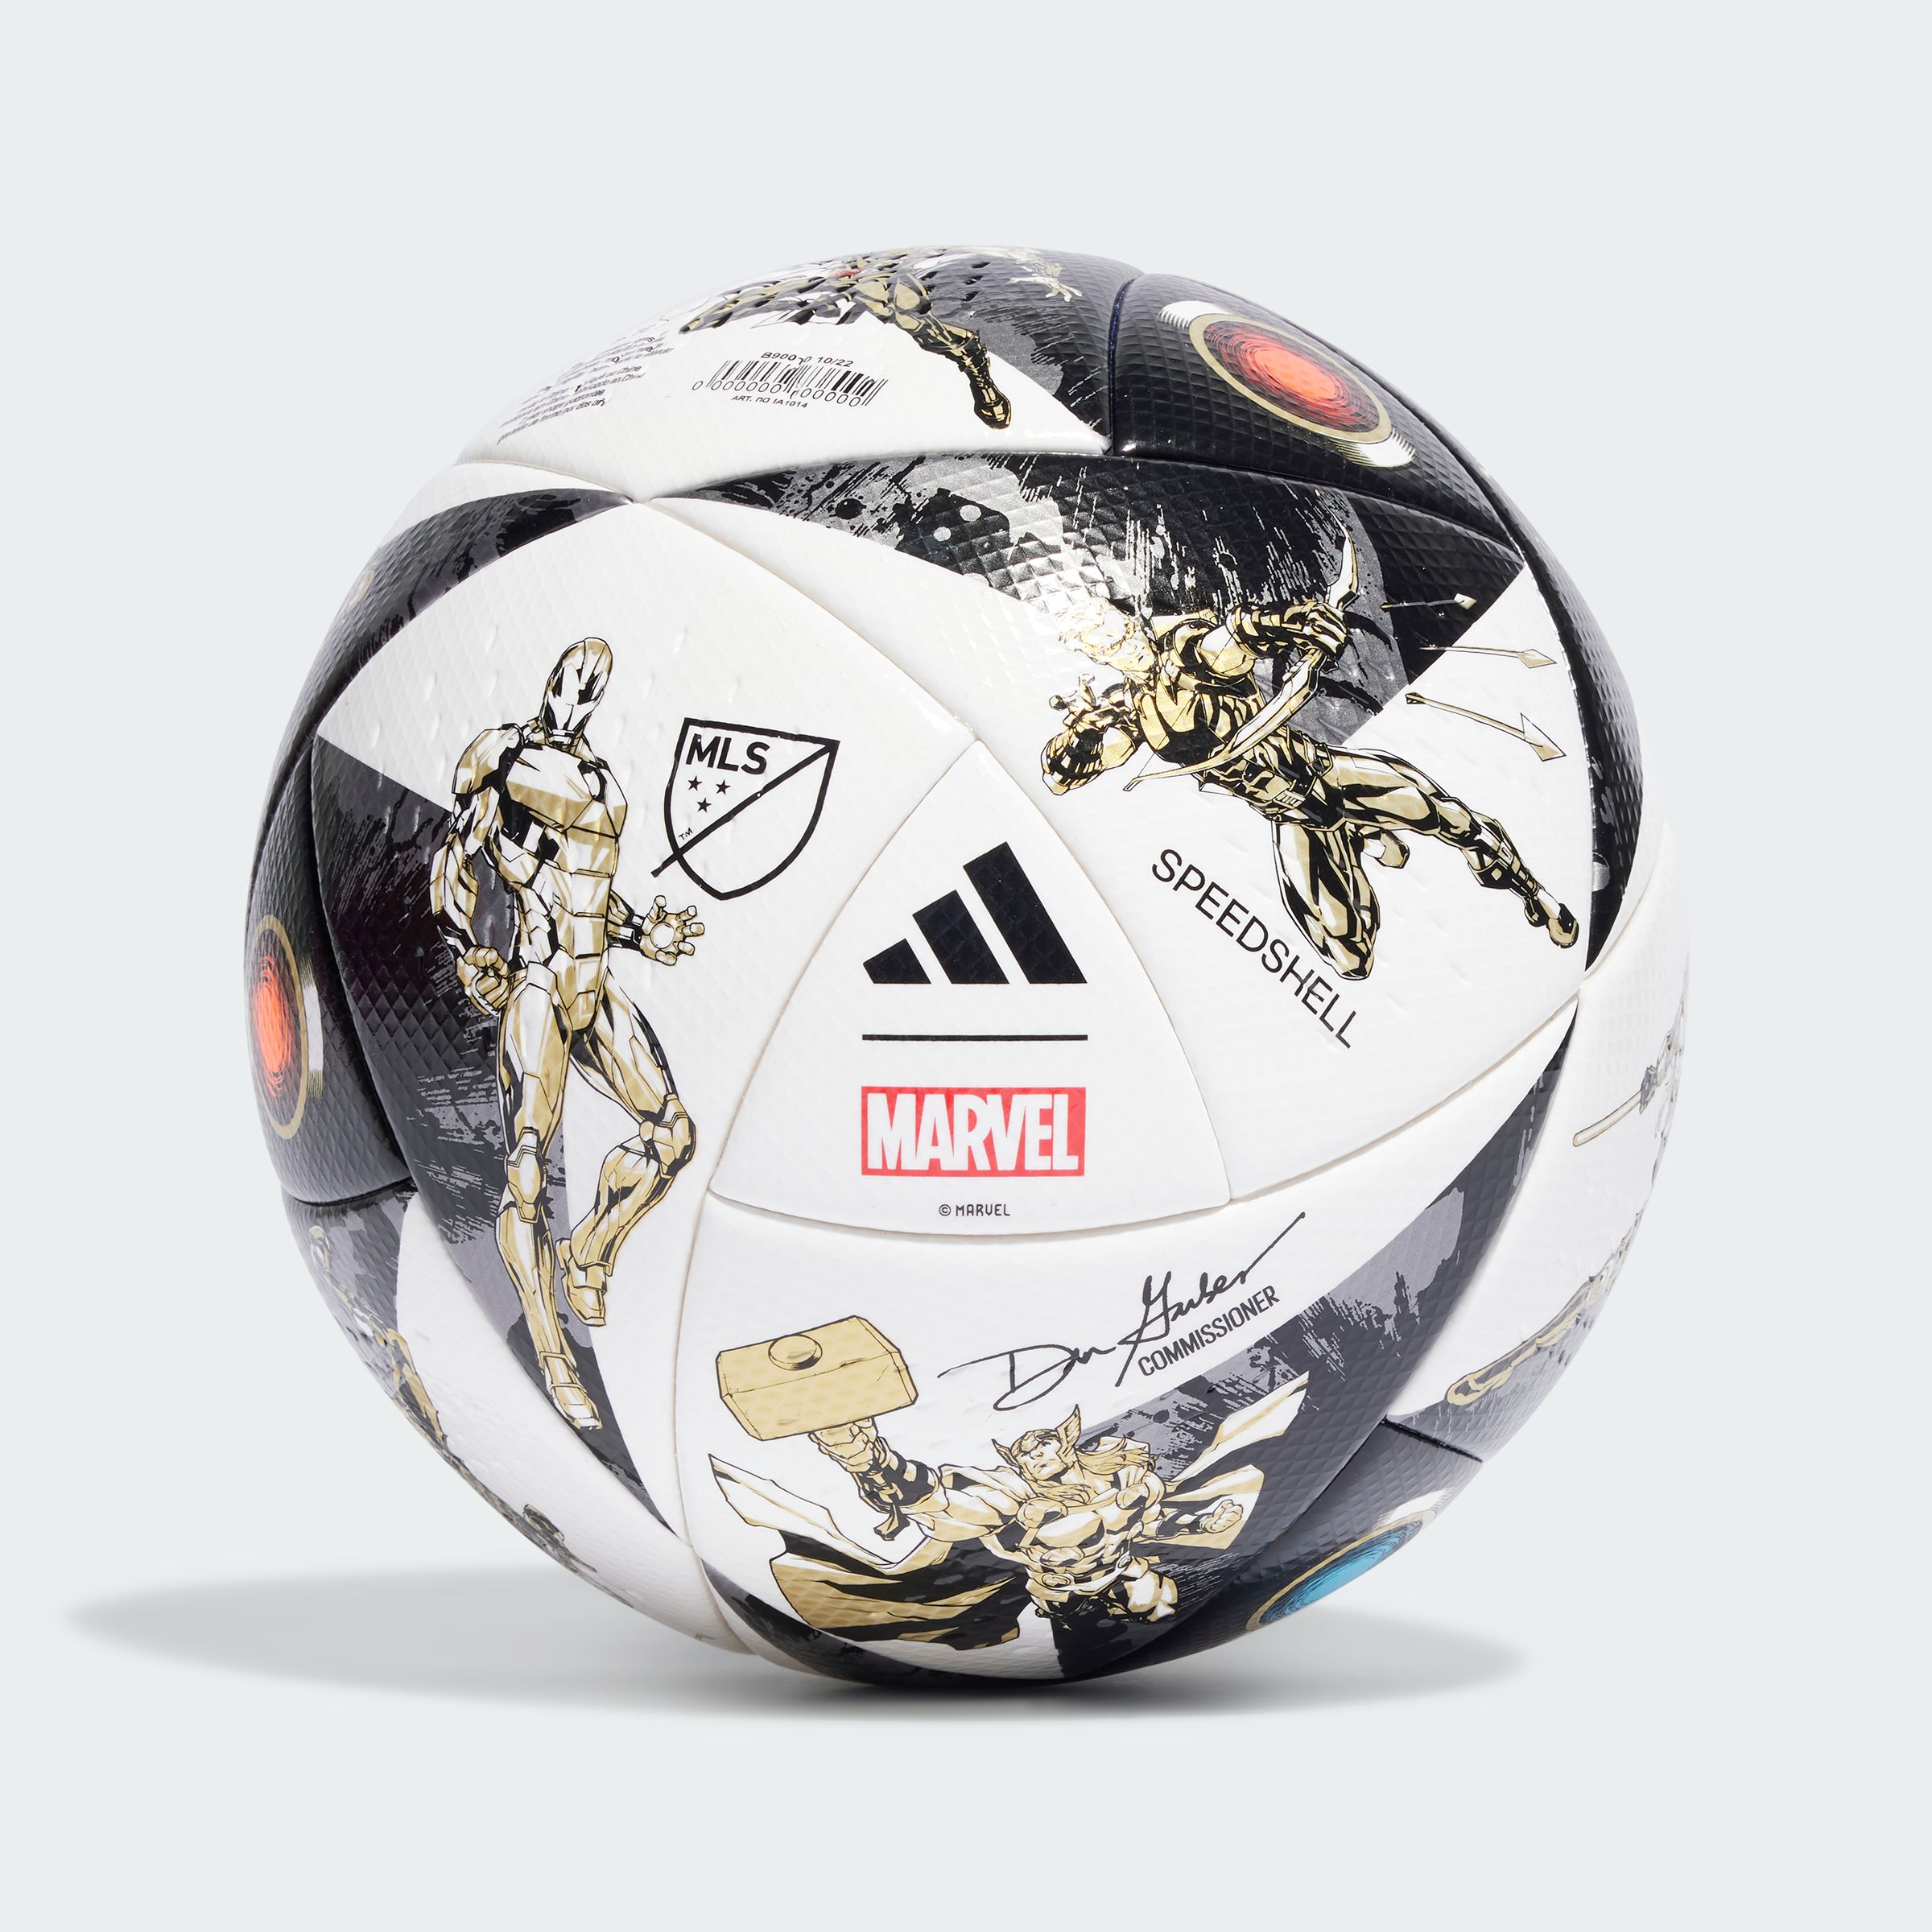 Adidas MLS Marvel Pro Senior Soccer Ball - Size 5